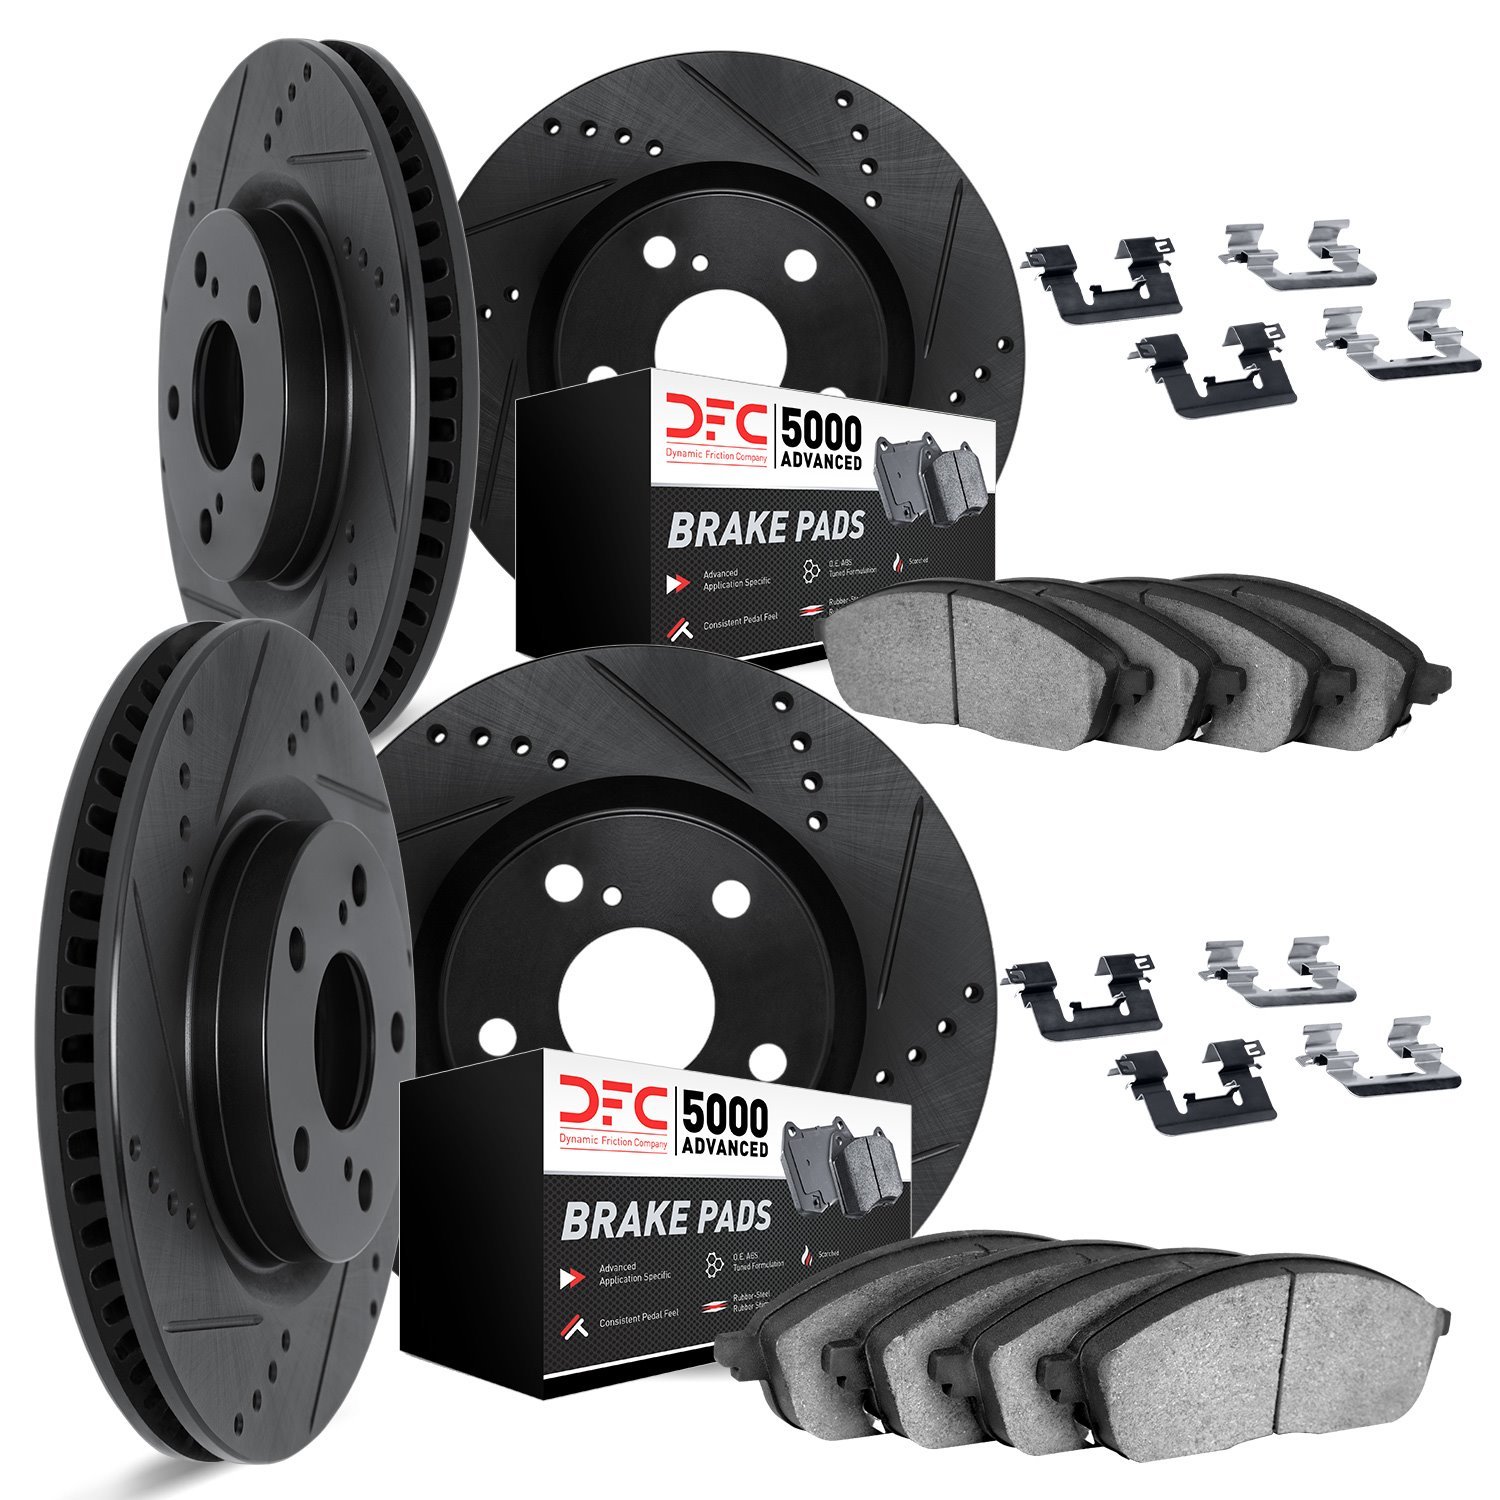 8514-39044 Drilled/Slotted Brake Rotors w/5000 Advanced Brake Pads Kit & Hardware [Black], 2005-2018 Mopar, Position: Front and